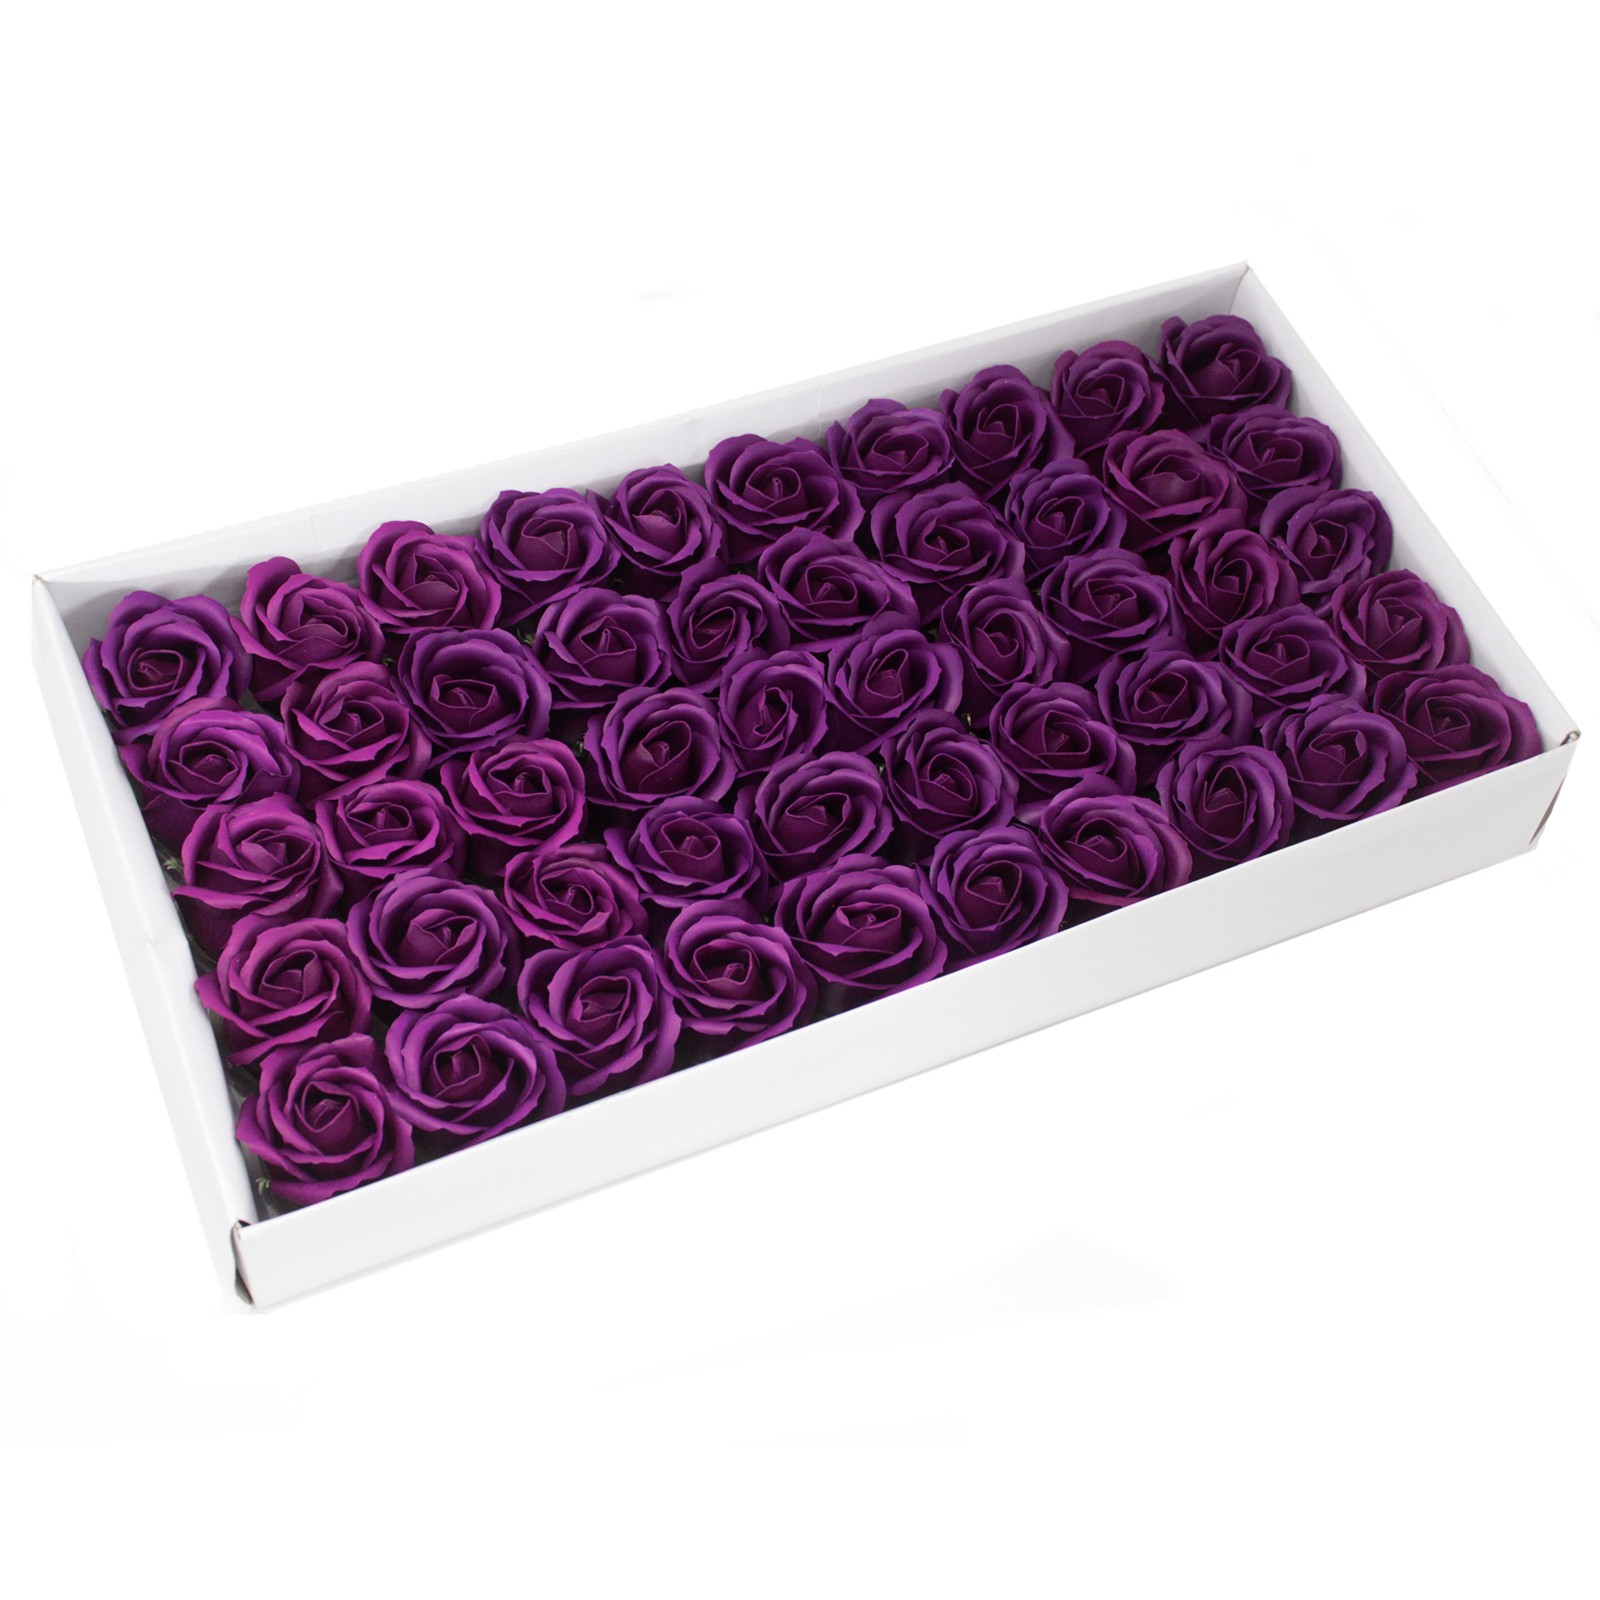 10 x Craft Soap Flowers - Med Rose - Deep Violet - Click Image to Close